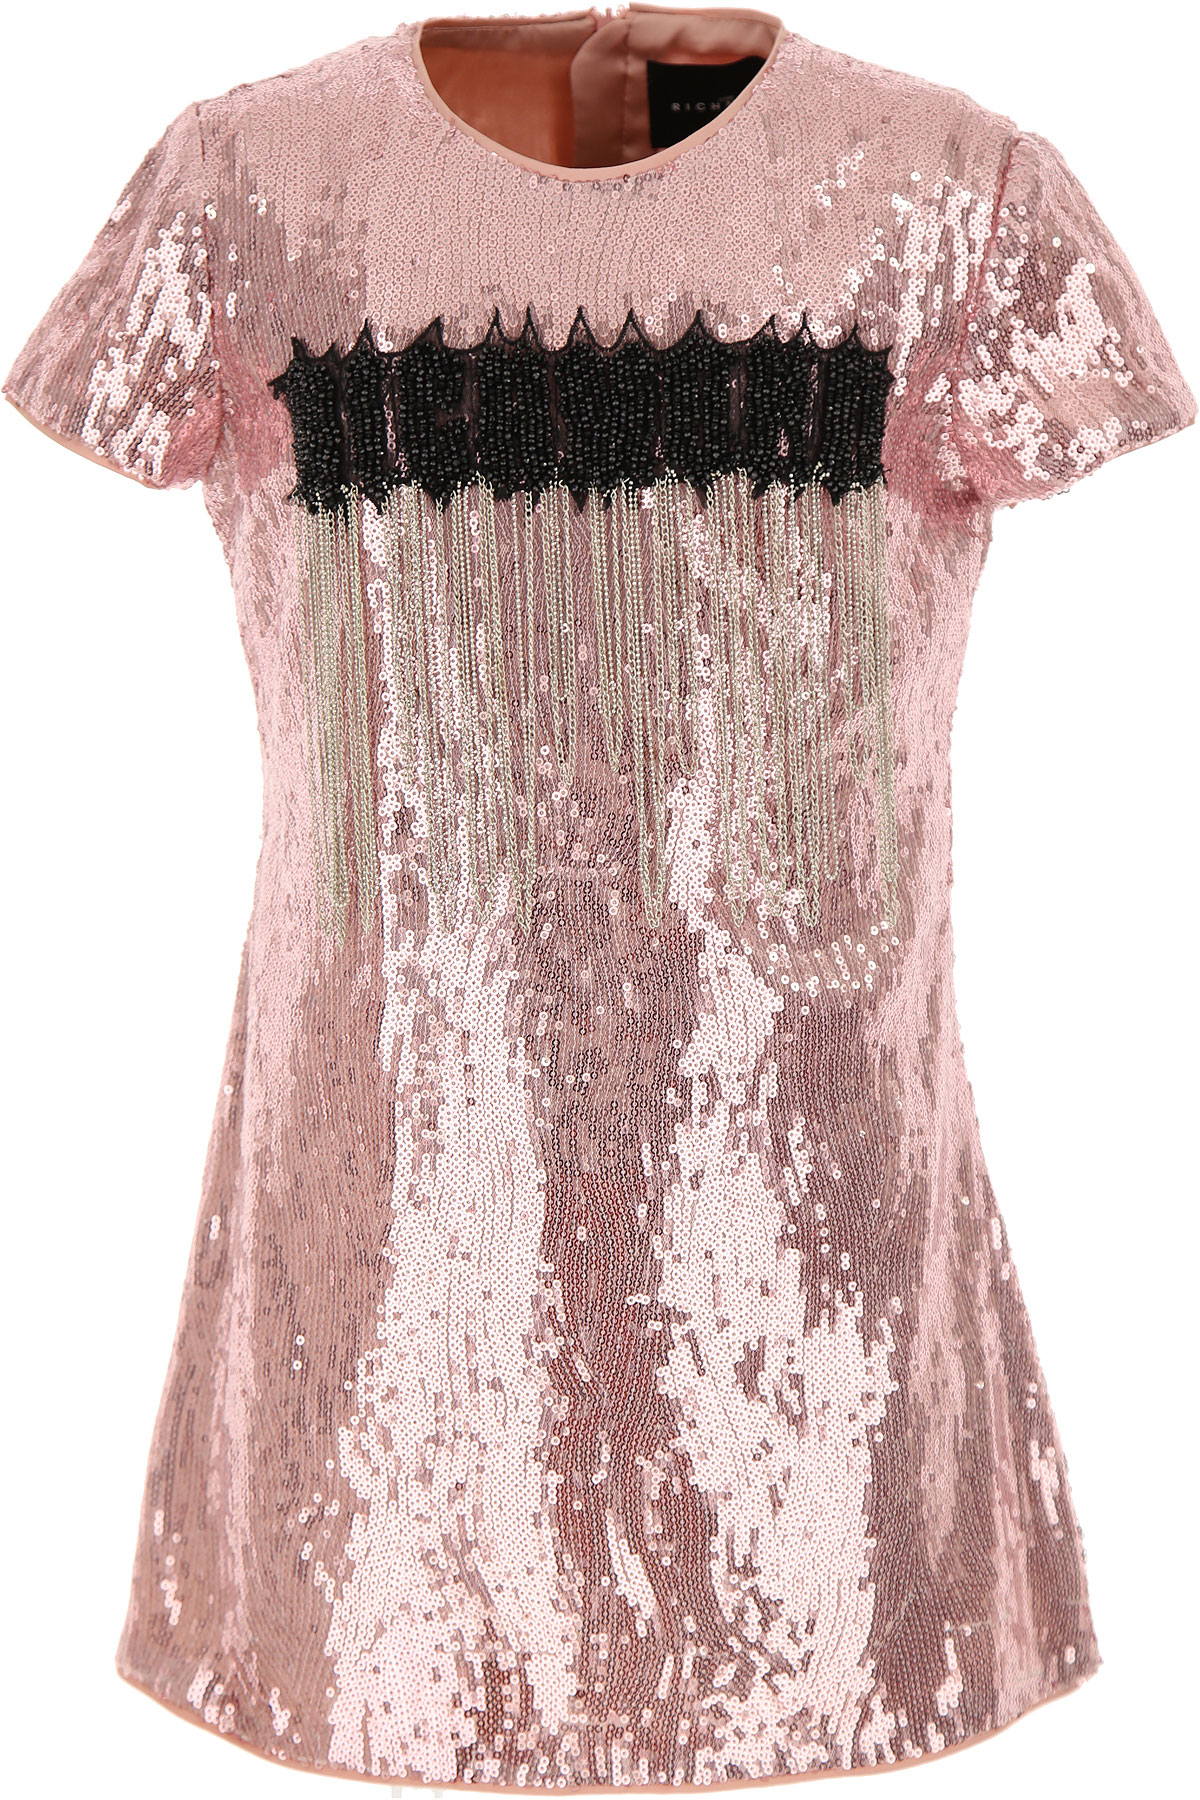 Richmond Kleid für Mädchen Günstig im Sale, Pink, Polyester, 2017, 10Y 12Y 14Y 16Y 4Y 6Y 8Y